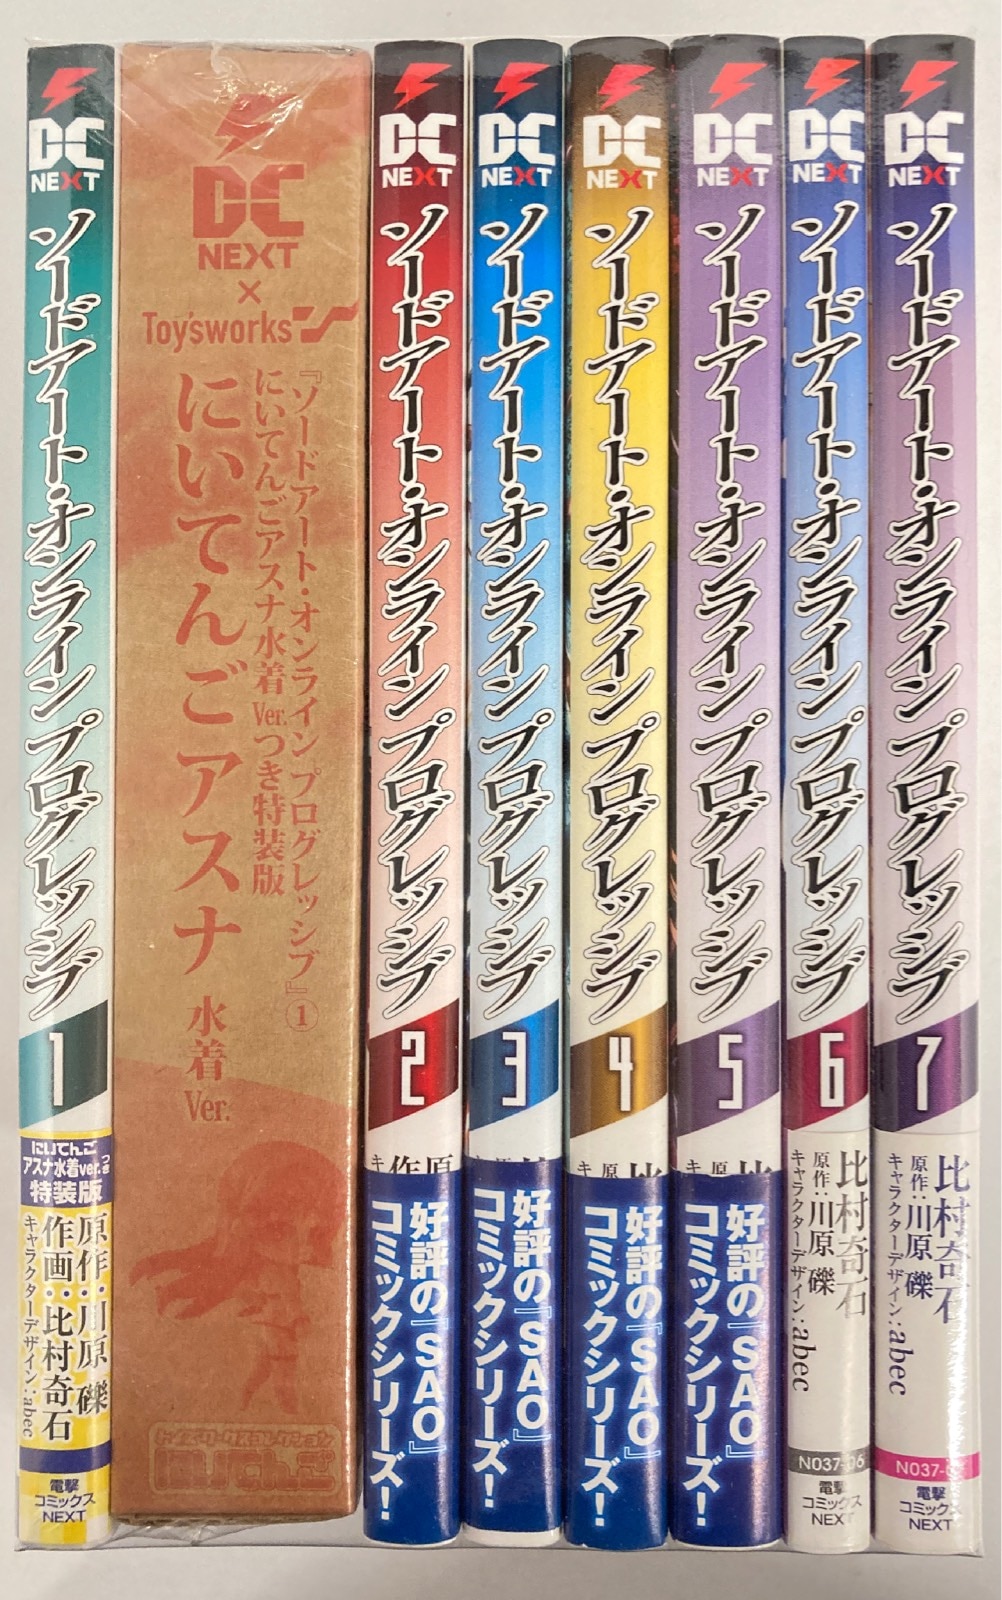 Sword Art Online Progressive Manga, Vol. 5 by Kiseki Himura